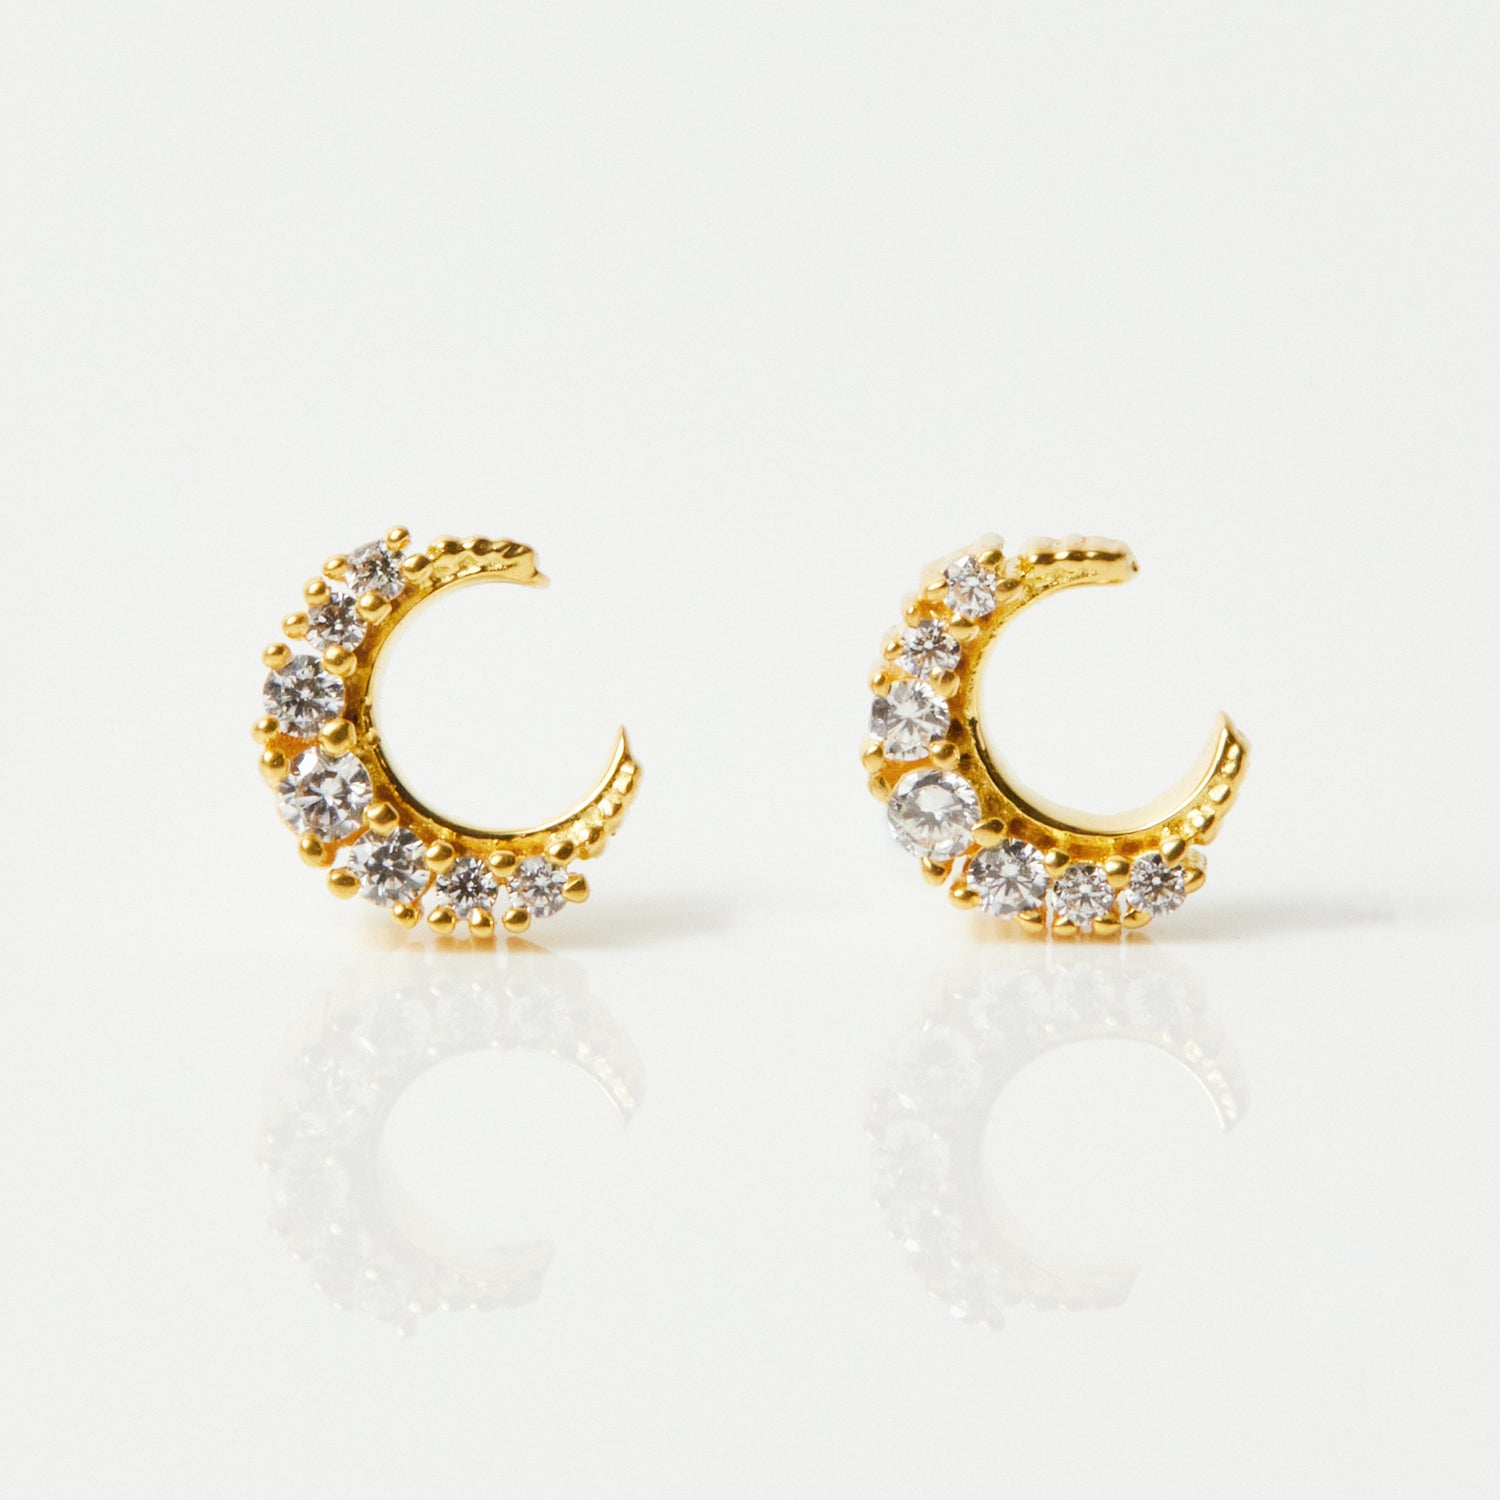 Celestial Moon Stud Earrings in Gold Vermeil - Earrings - Carrie Elizabeth